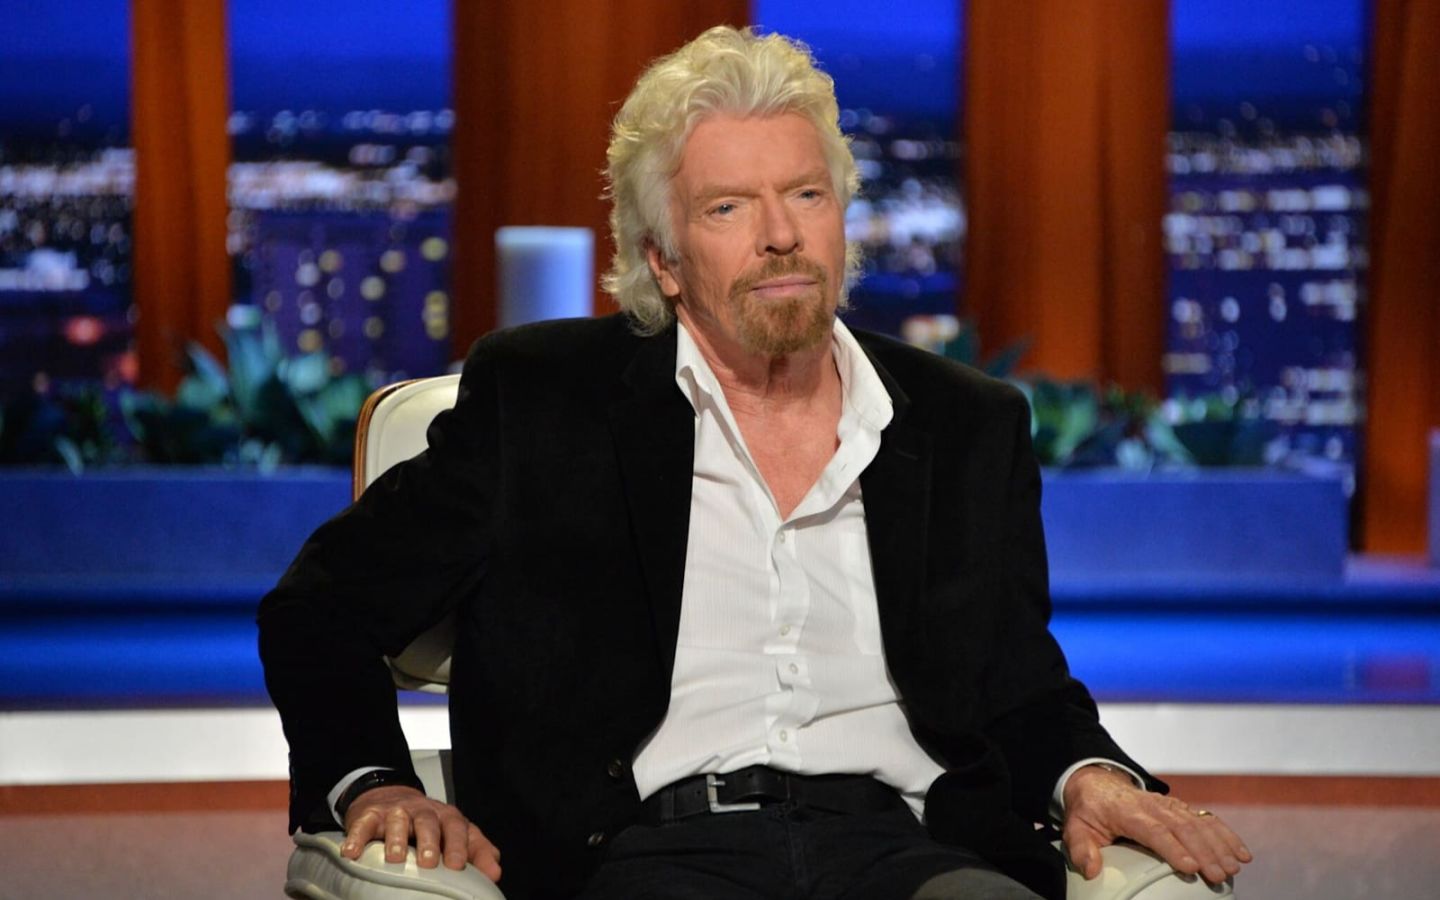 Richard Branson throws water at Mark Cuban